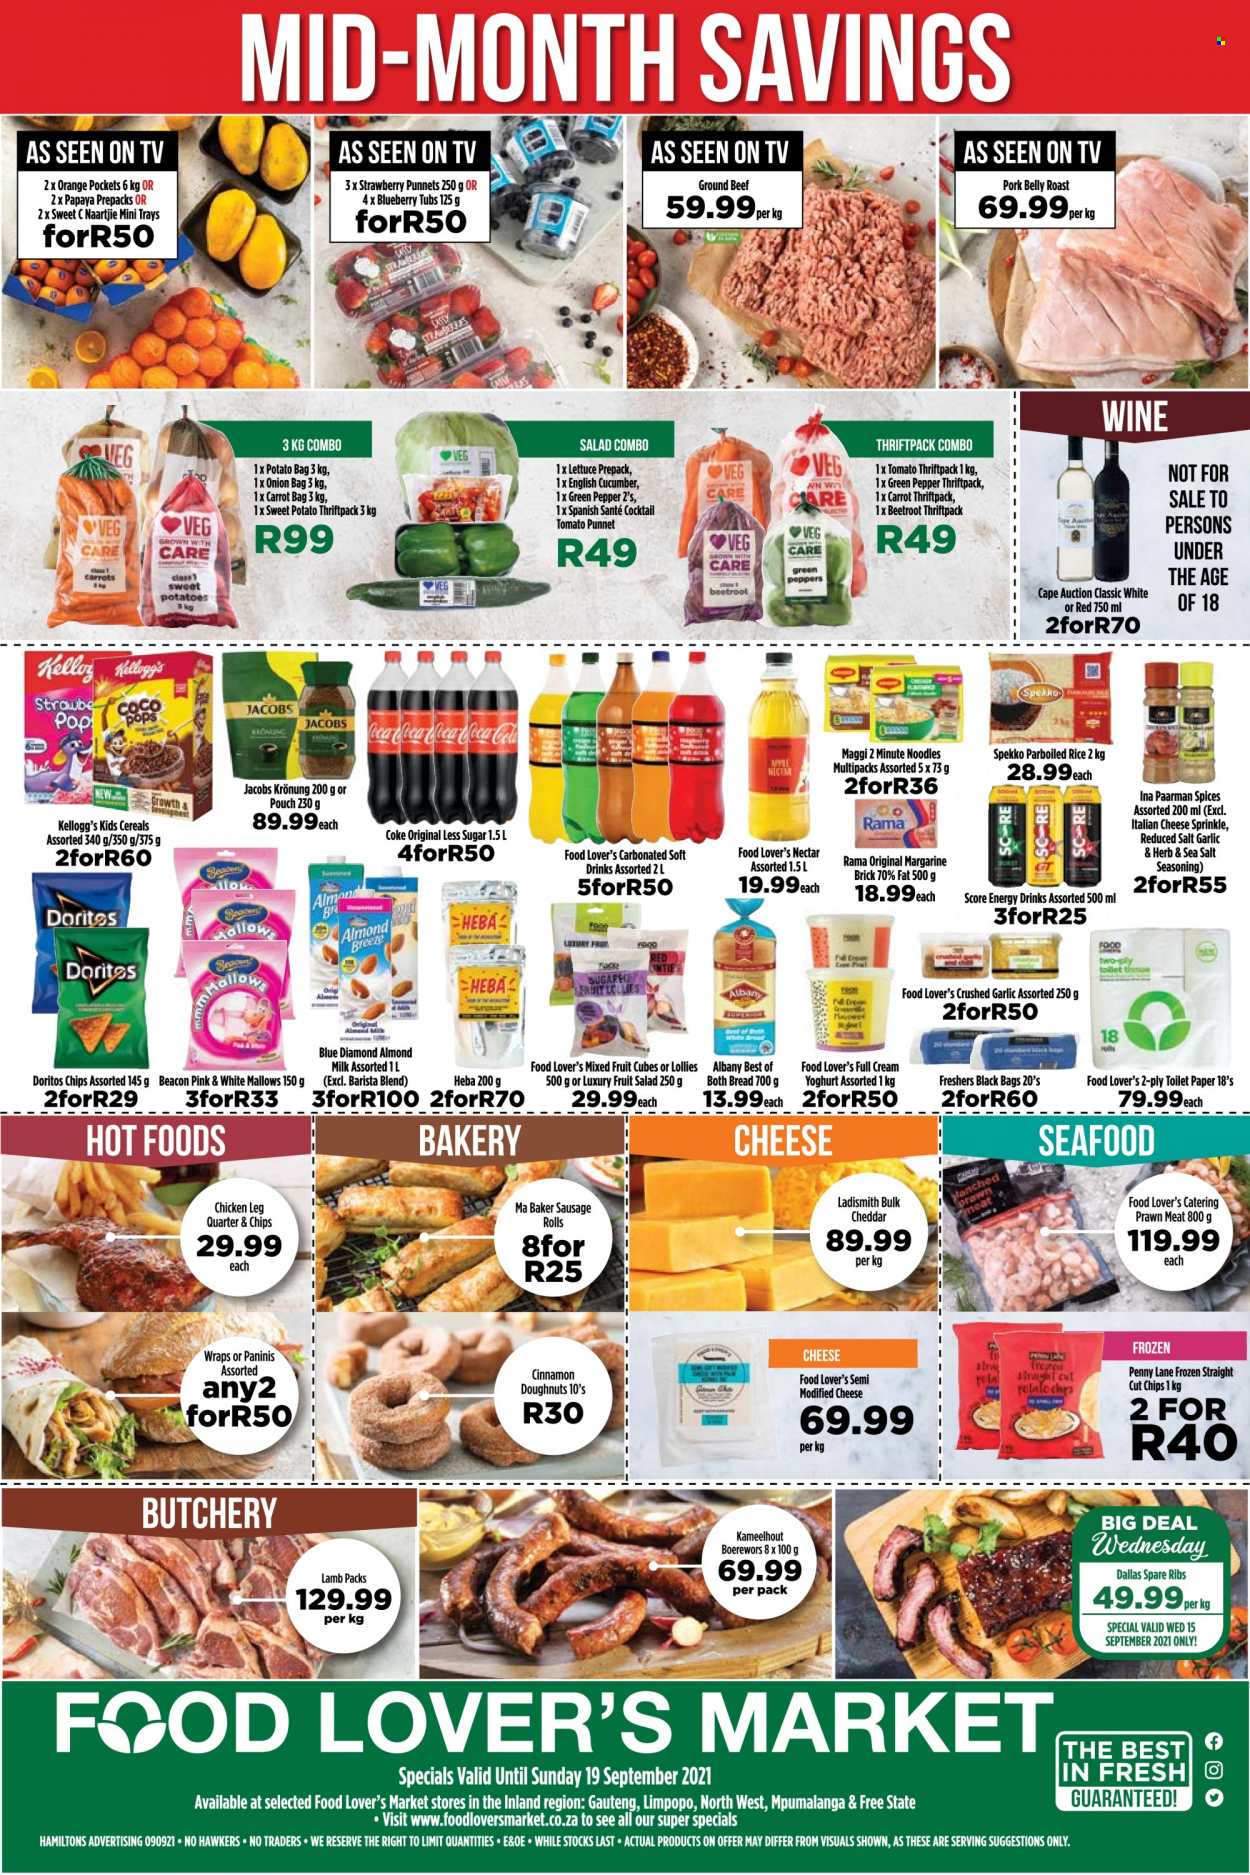 Food Lover's Market specials - 09.14.2021 - 09.19.2021. 